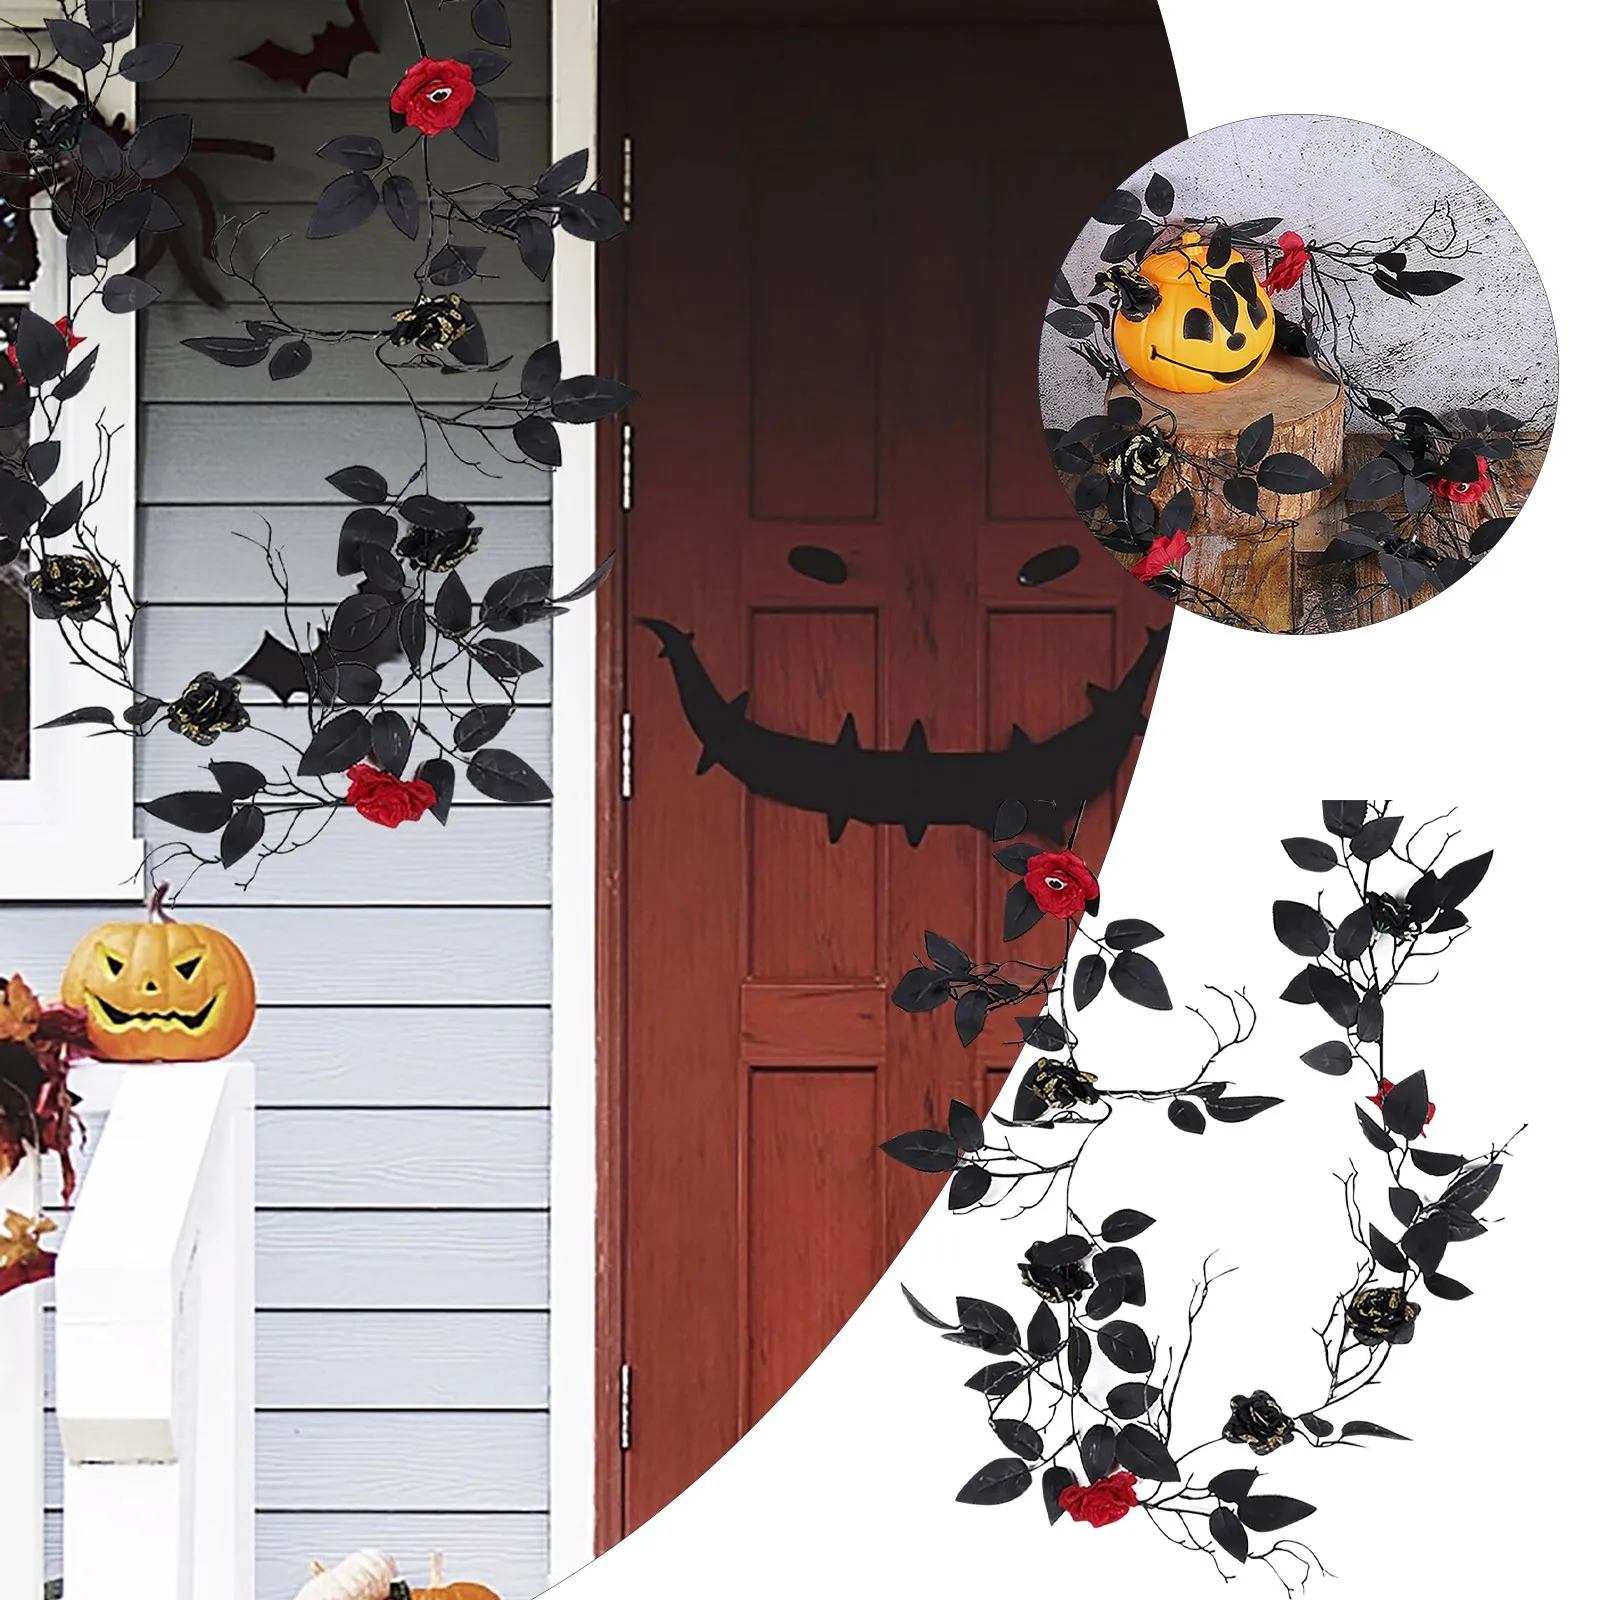 Trick or Treat! Как украсить дом на Хэллоуин: идеи своими руками